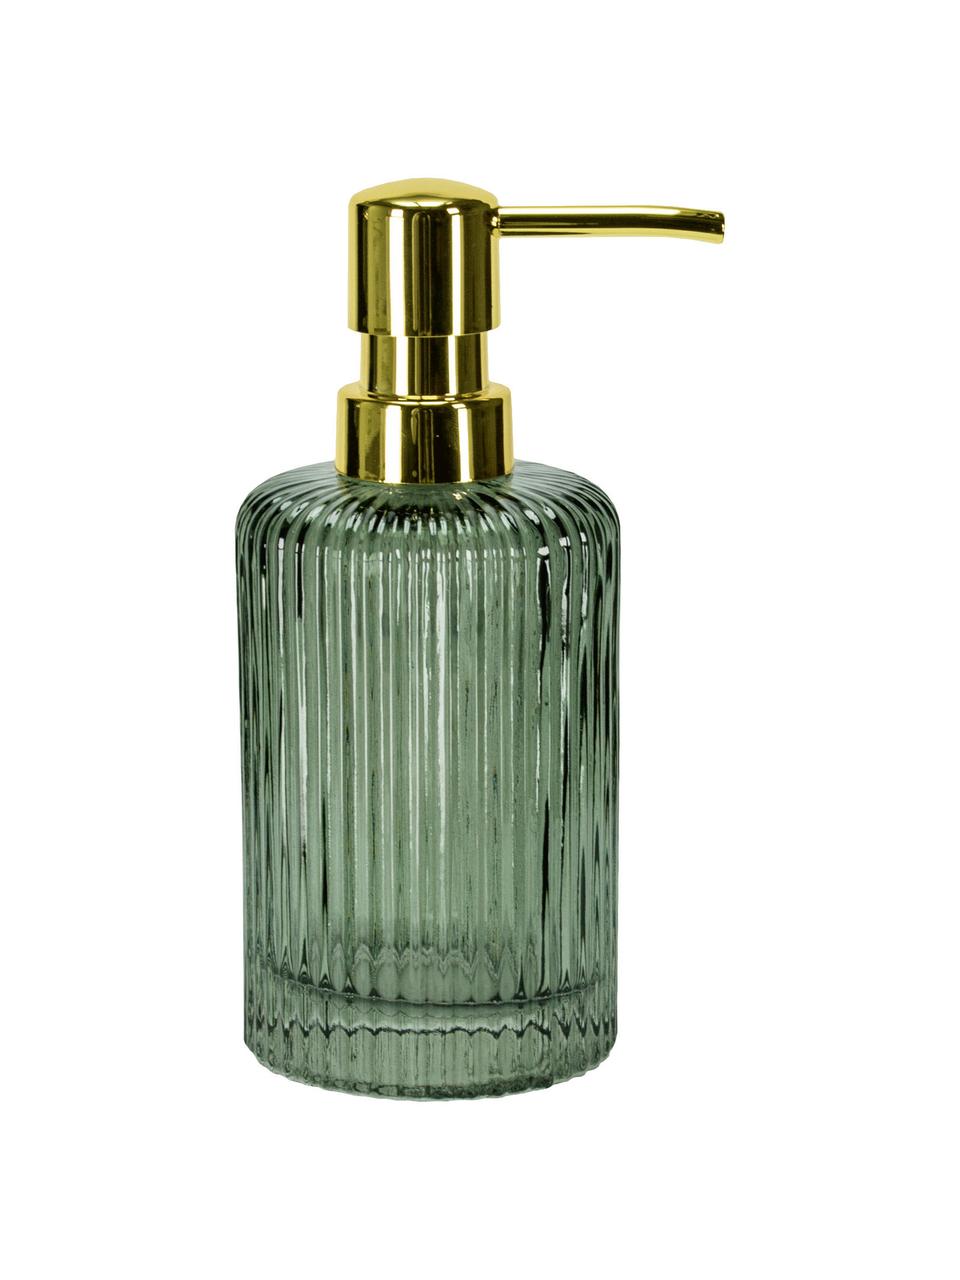 Dispenser sapone in vetro Antoinette, Testa della pompa: metallo, Verde oliva, Ø 8 x Alt. 17 cm